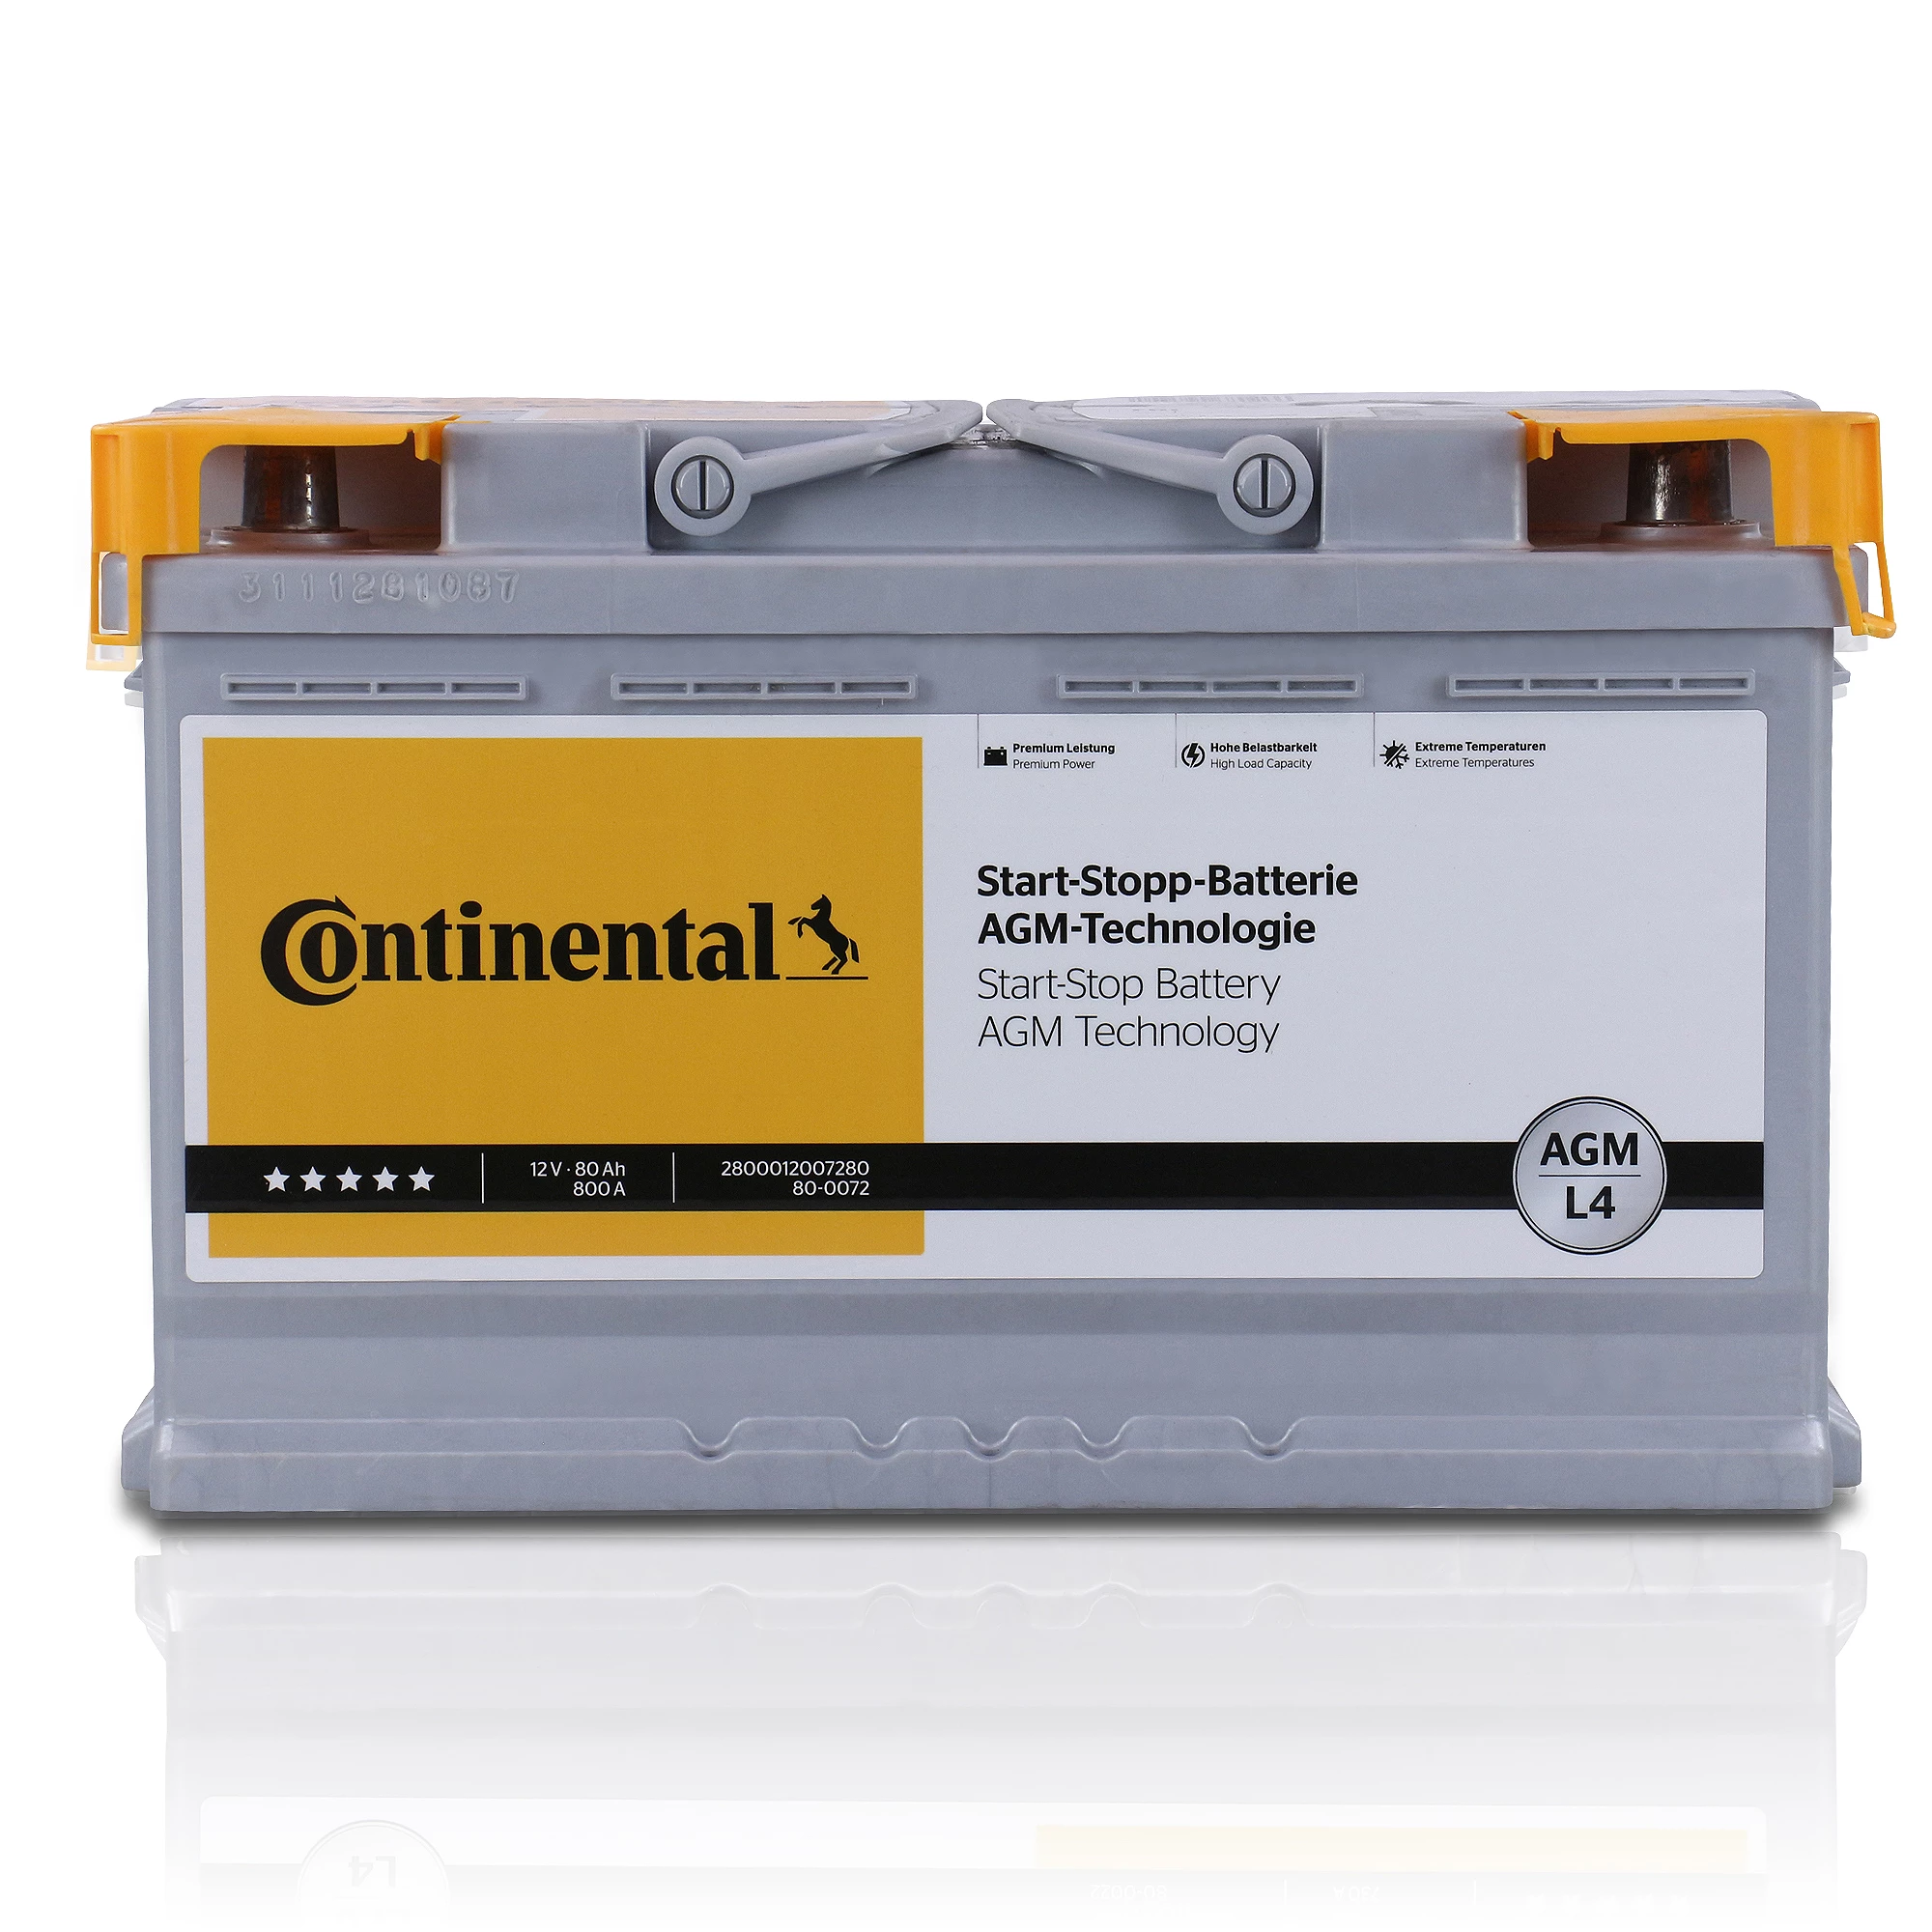 CONTINENTAL Starterbatterie AGM L4 80Ah 800A 2800012007280 günstig